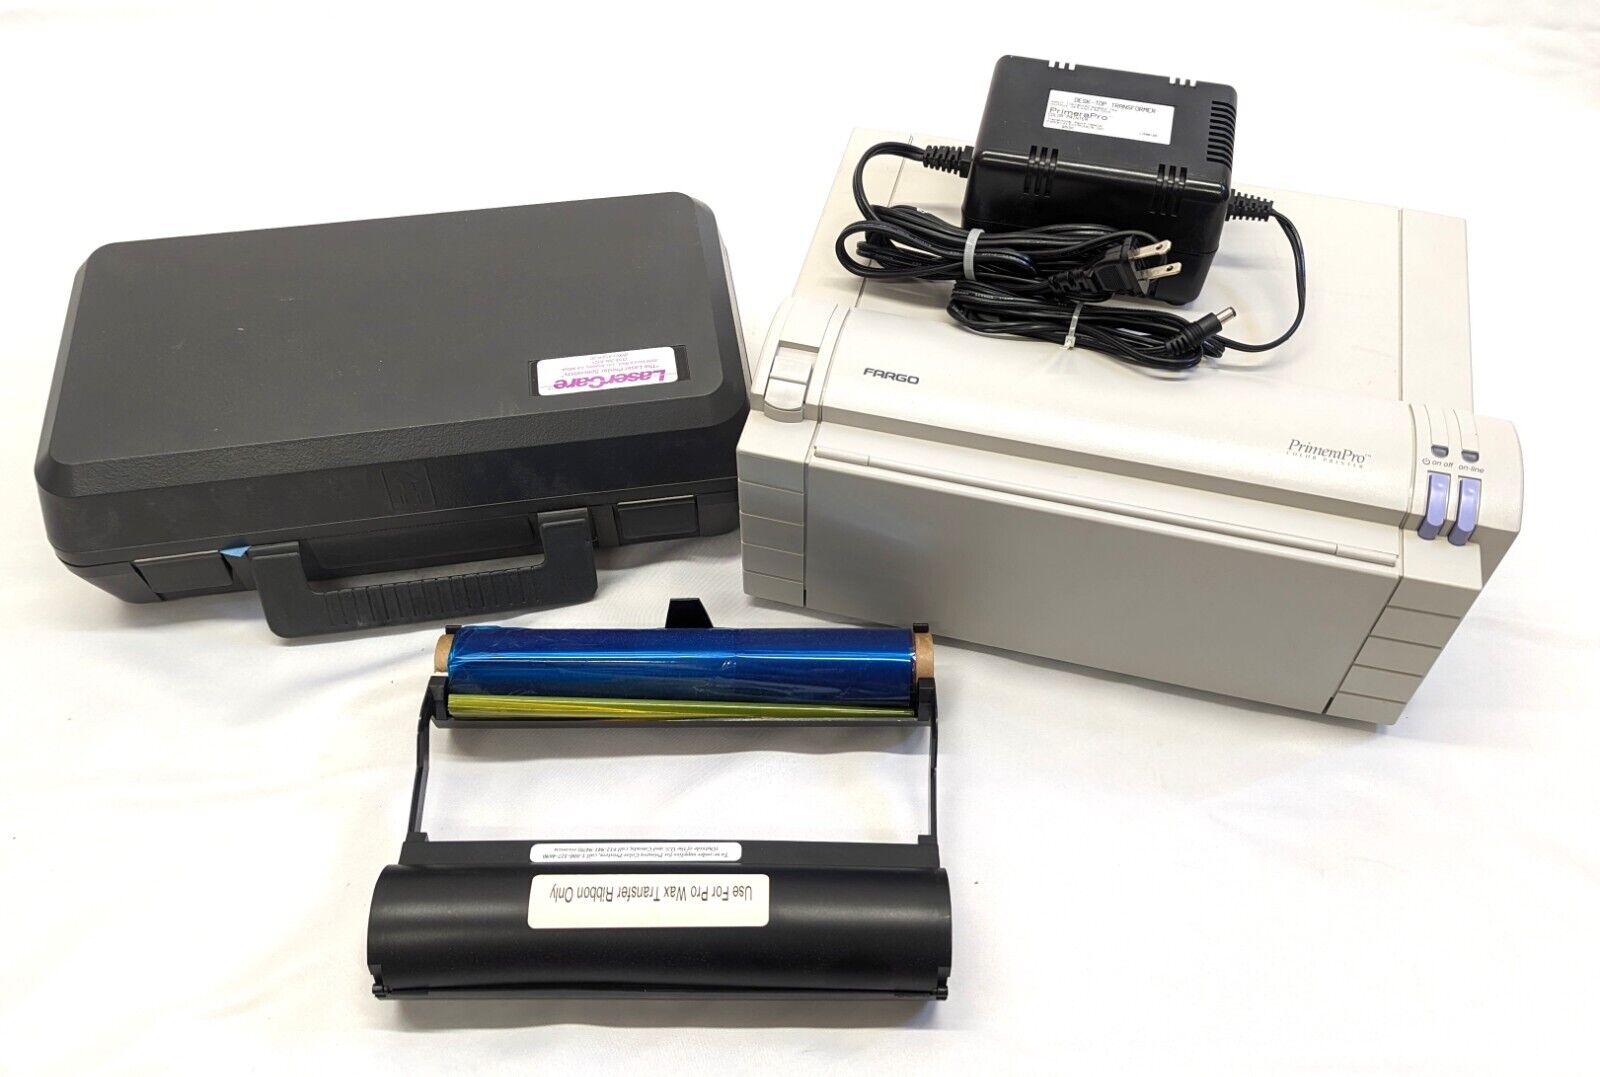 Rare Vintage 1994 Fargo Primera Pro Thermal Transfer Printer for 90s PC Systems